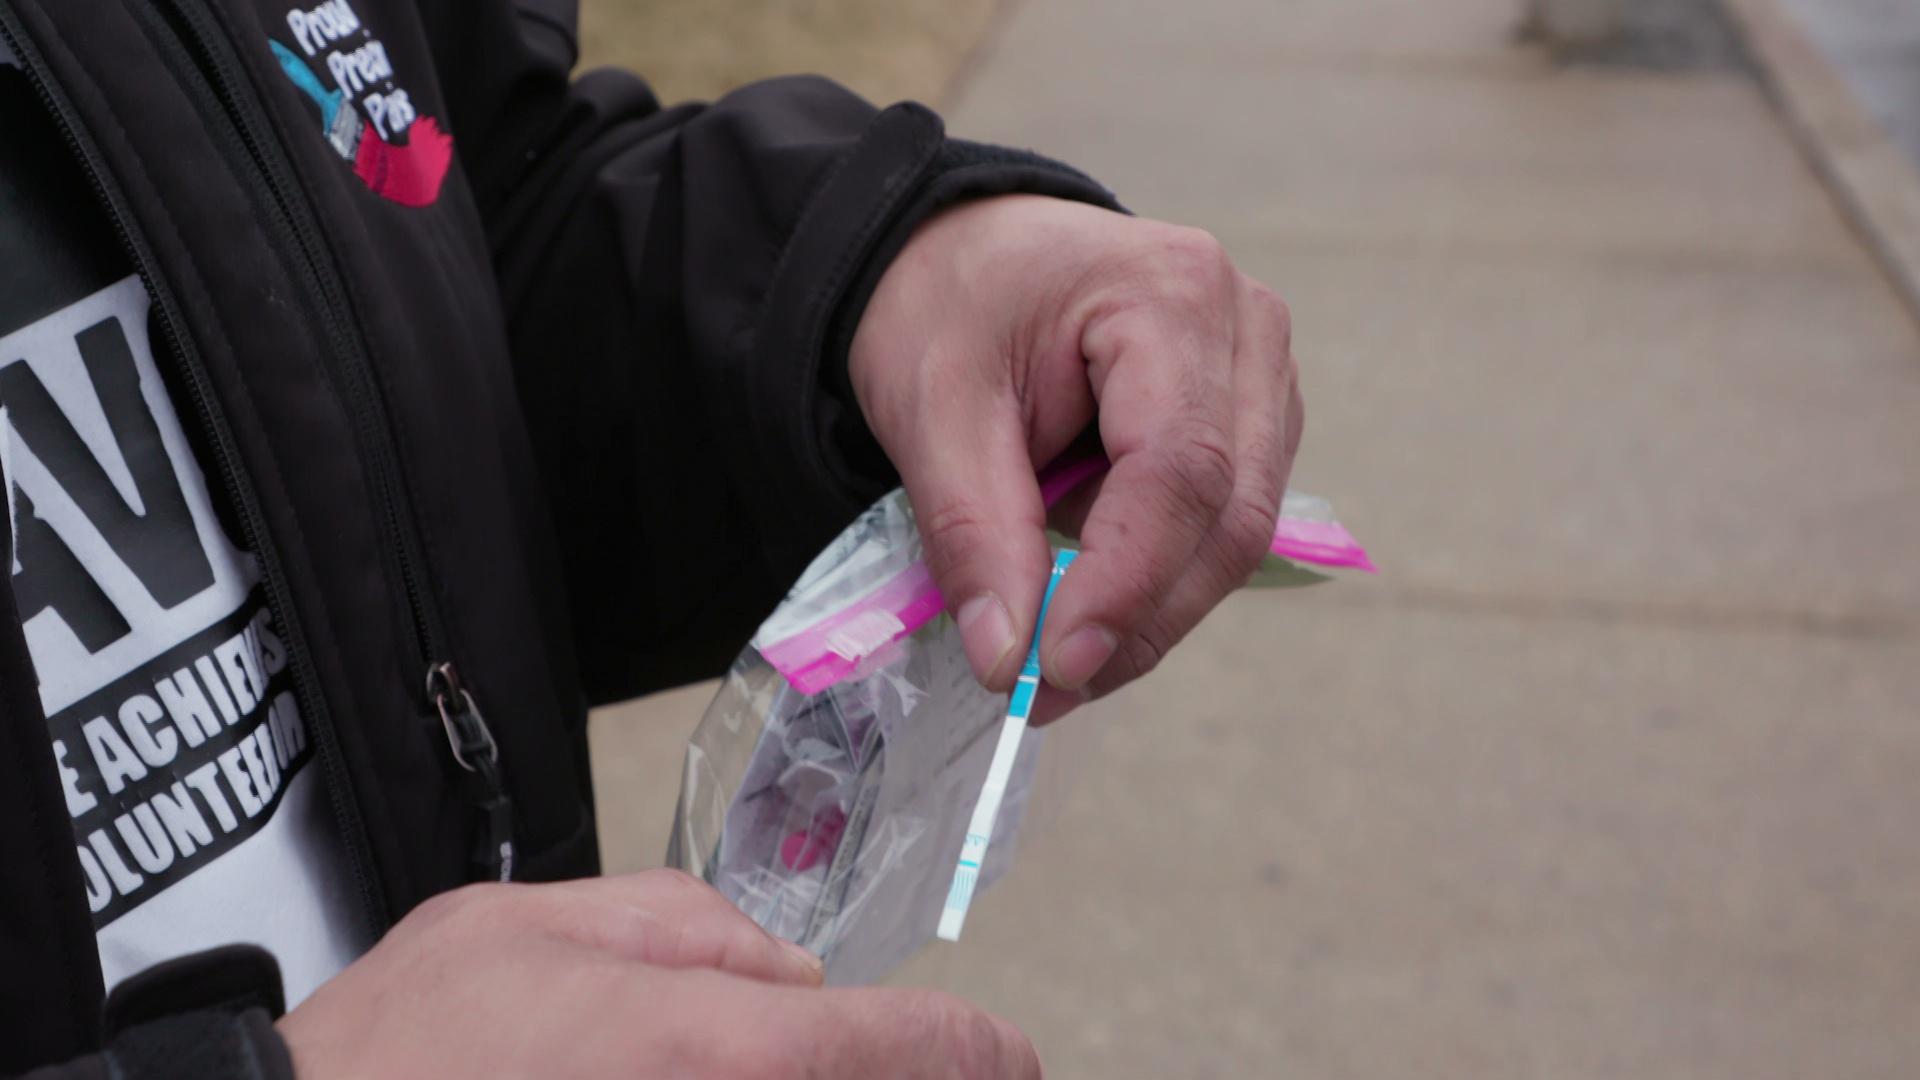 Fentanyl test strips get decriminalized in Wisconsin